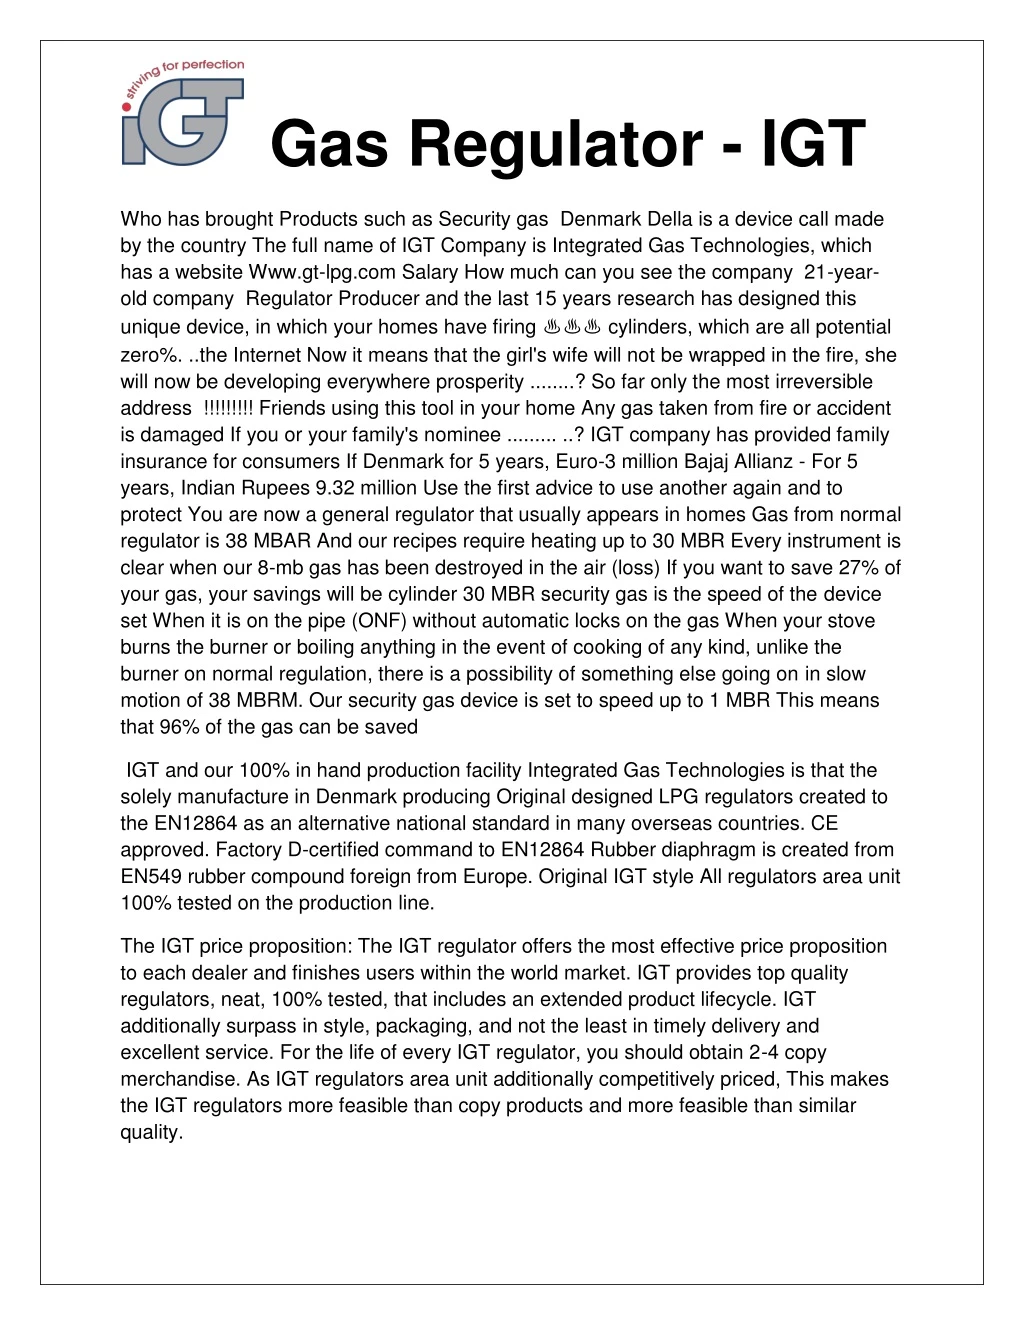 gas regulator igt